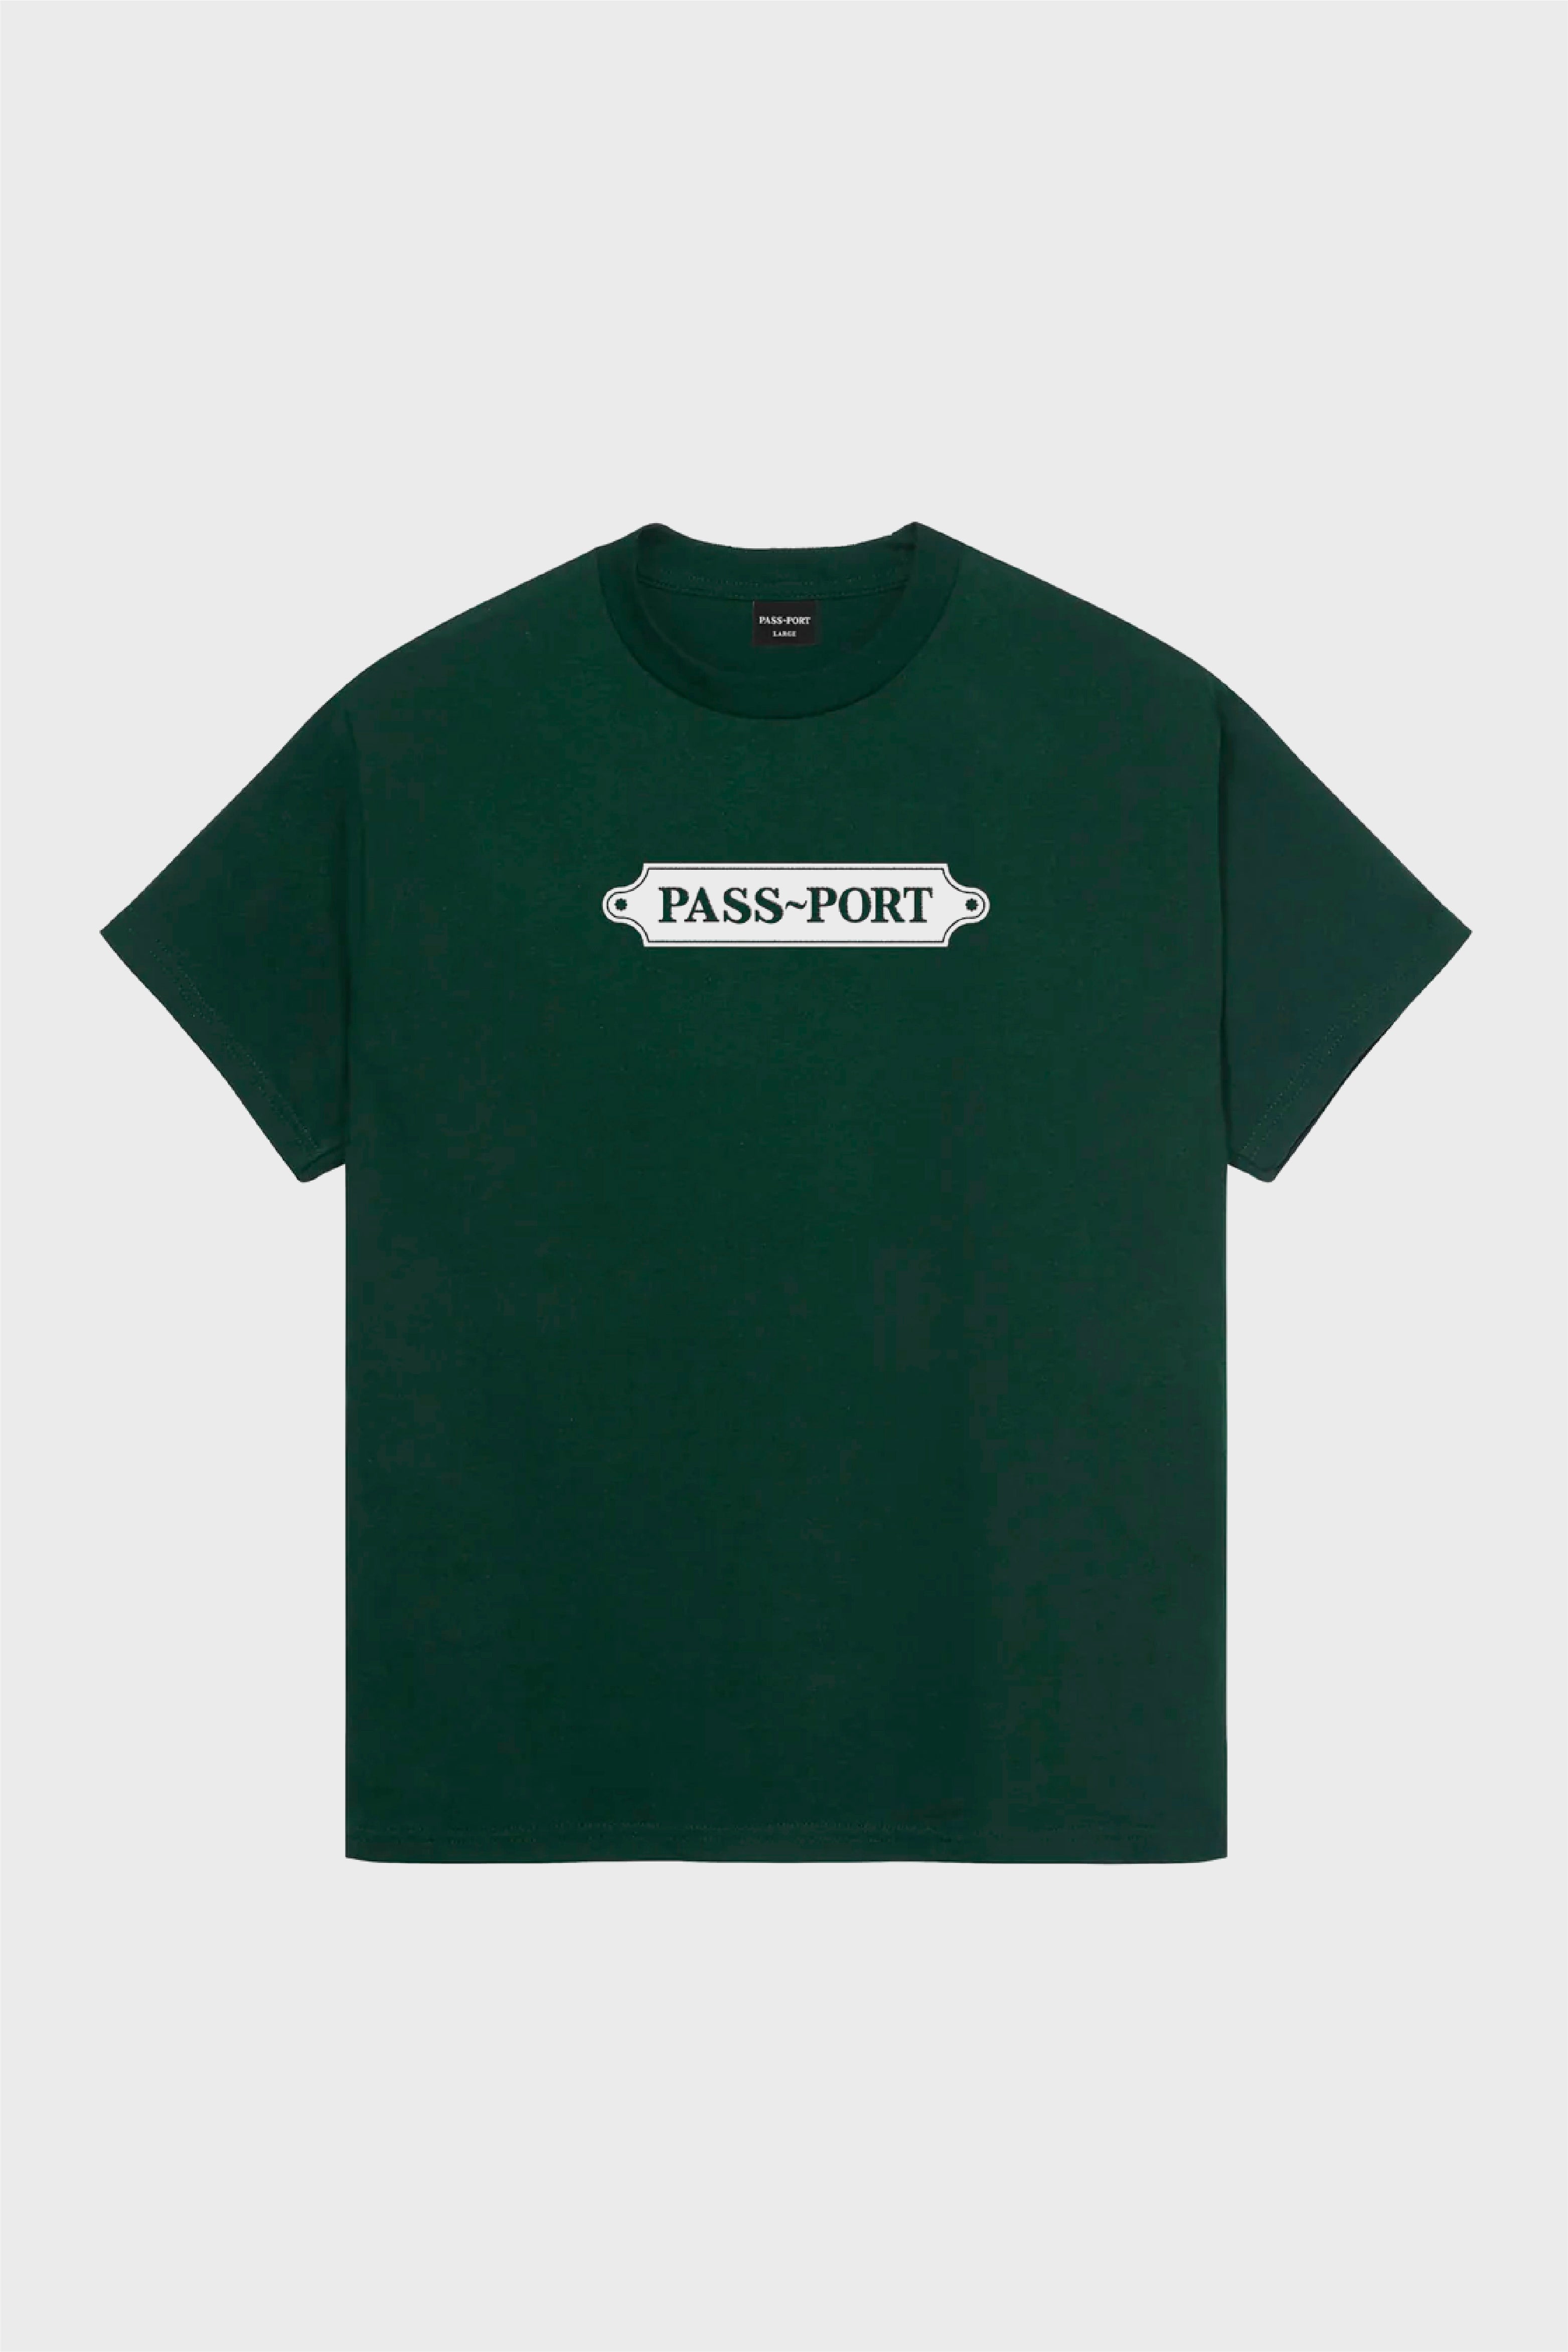 Selectshop FRAME - PASS-PORT Blood Hound Tee T-Shirts Dubai